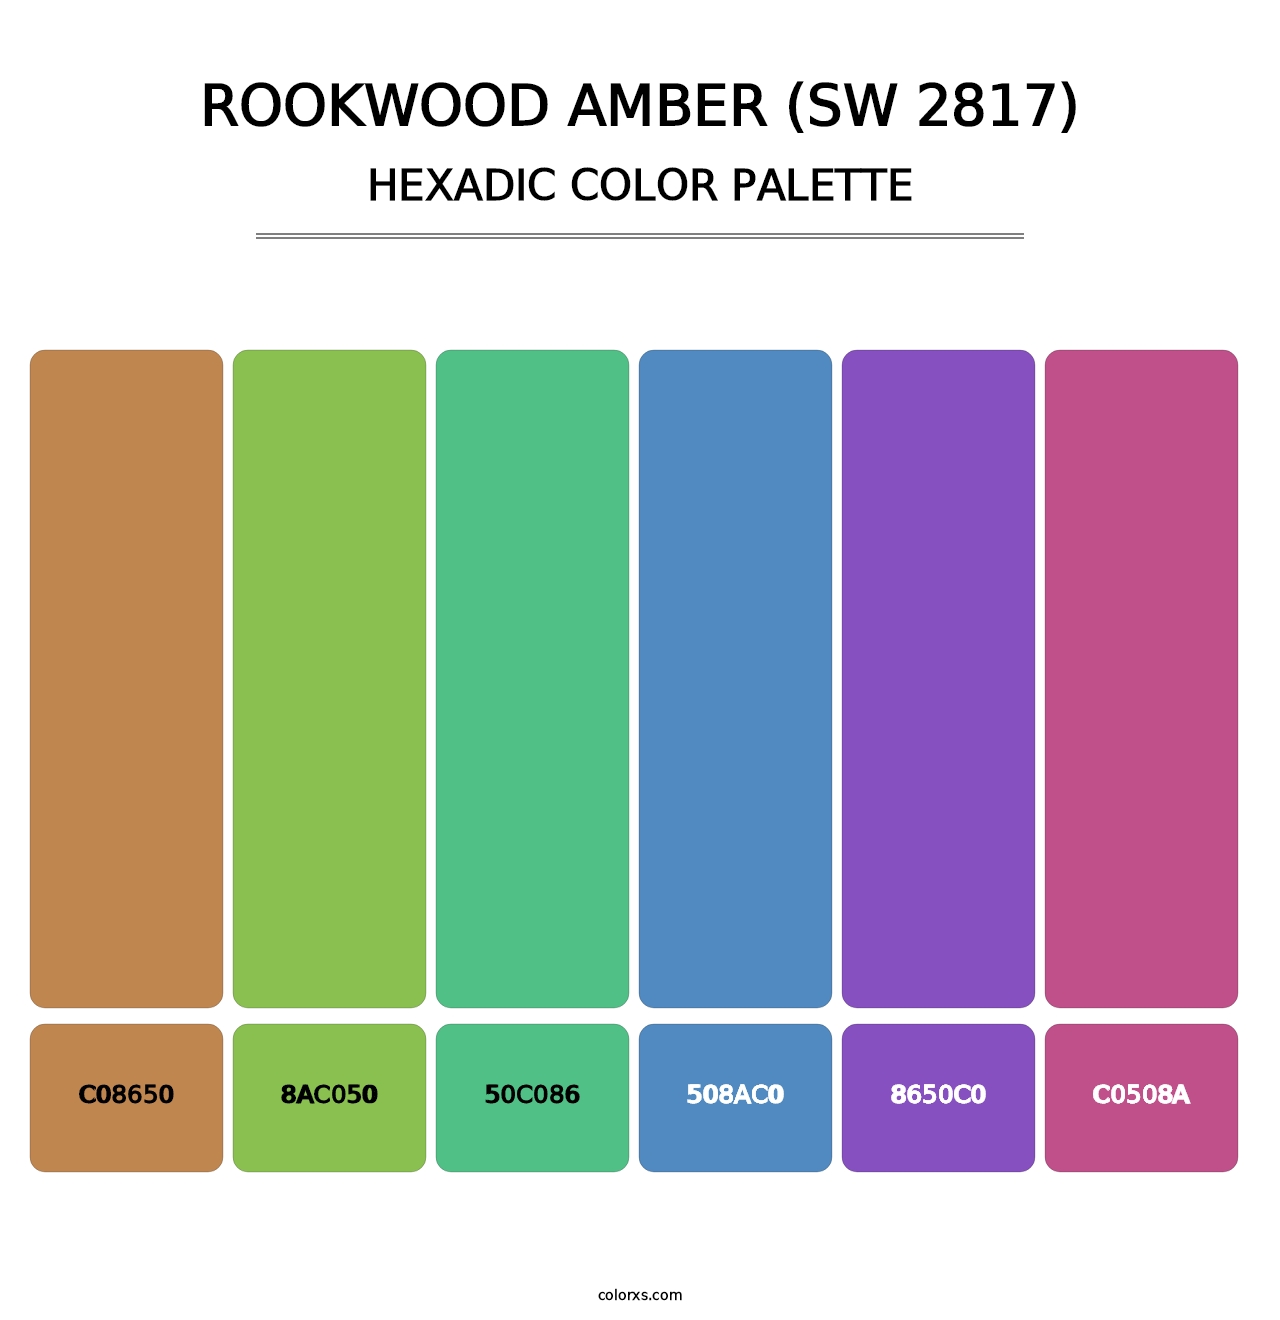 Rookwood Amber (SW 2817) - Hexadic Color Palette